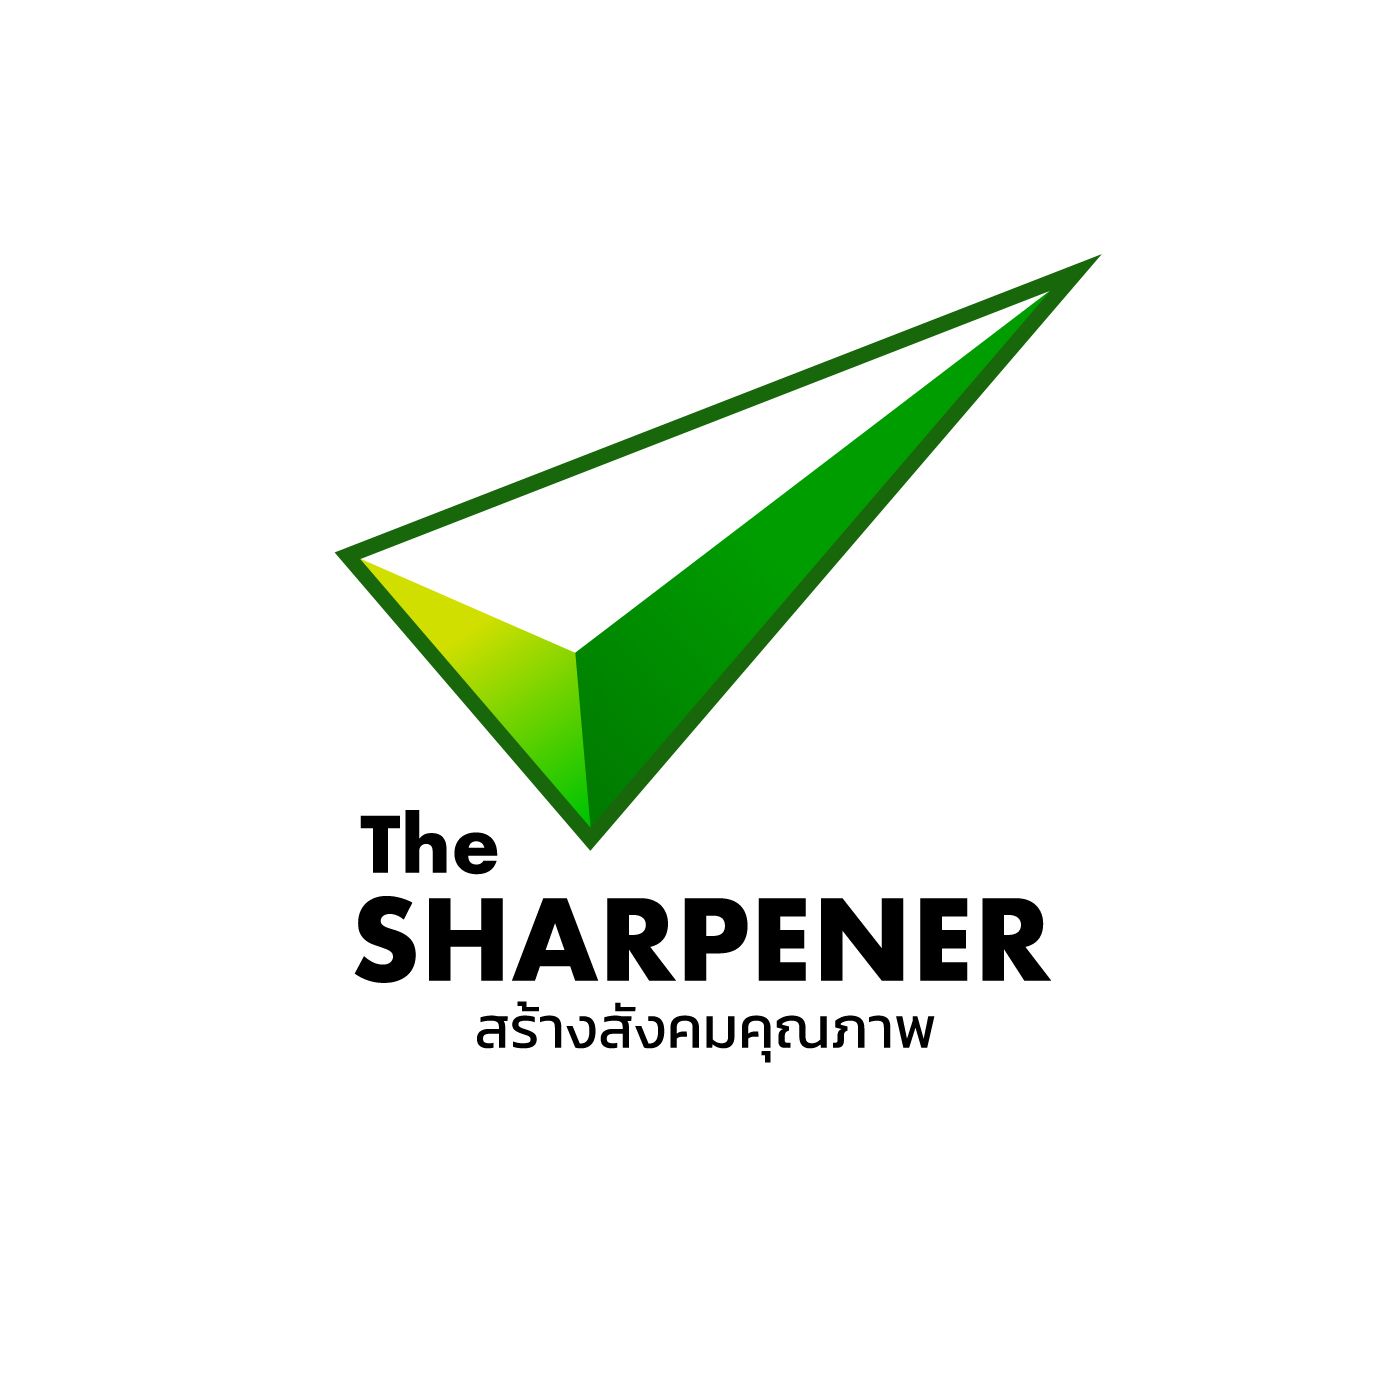 The Sharpener